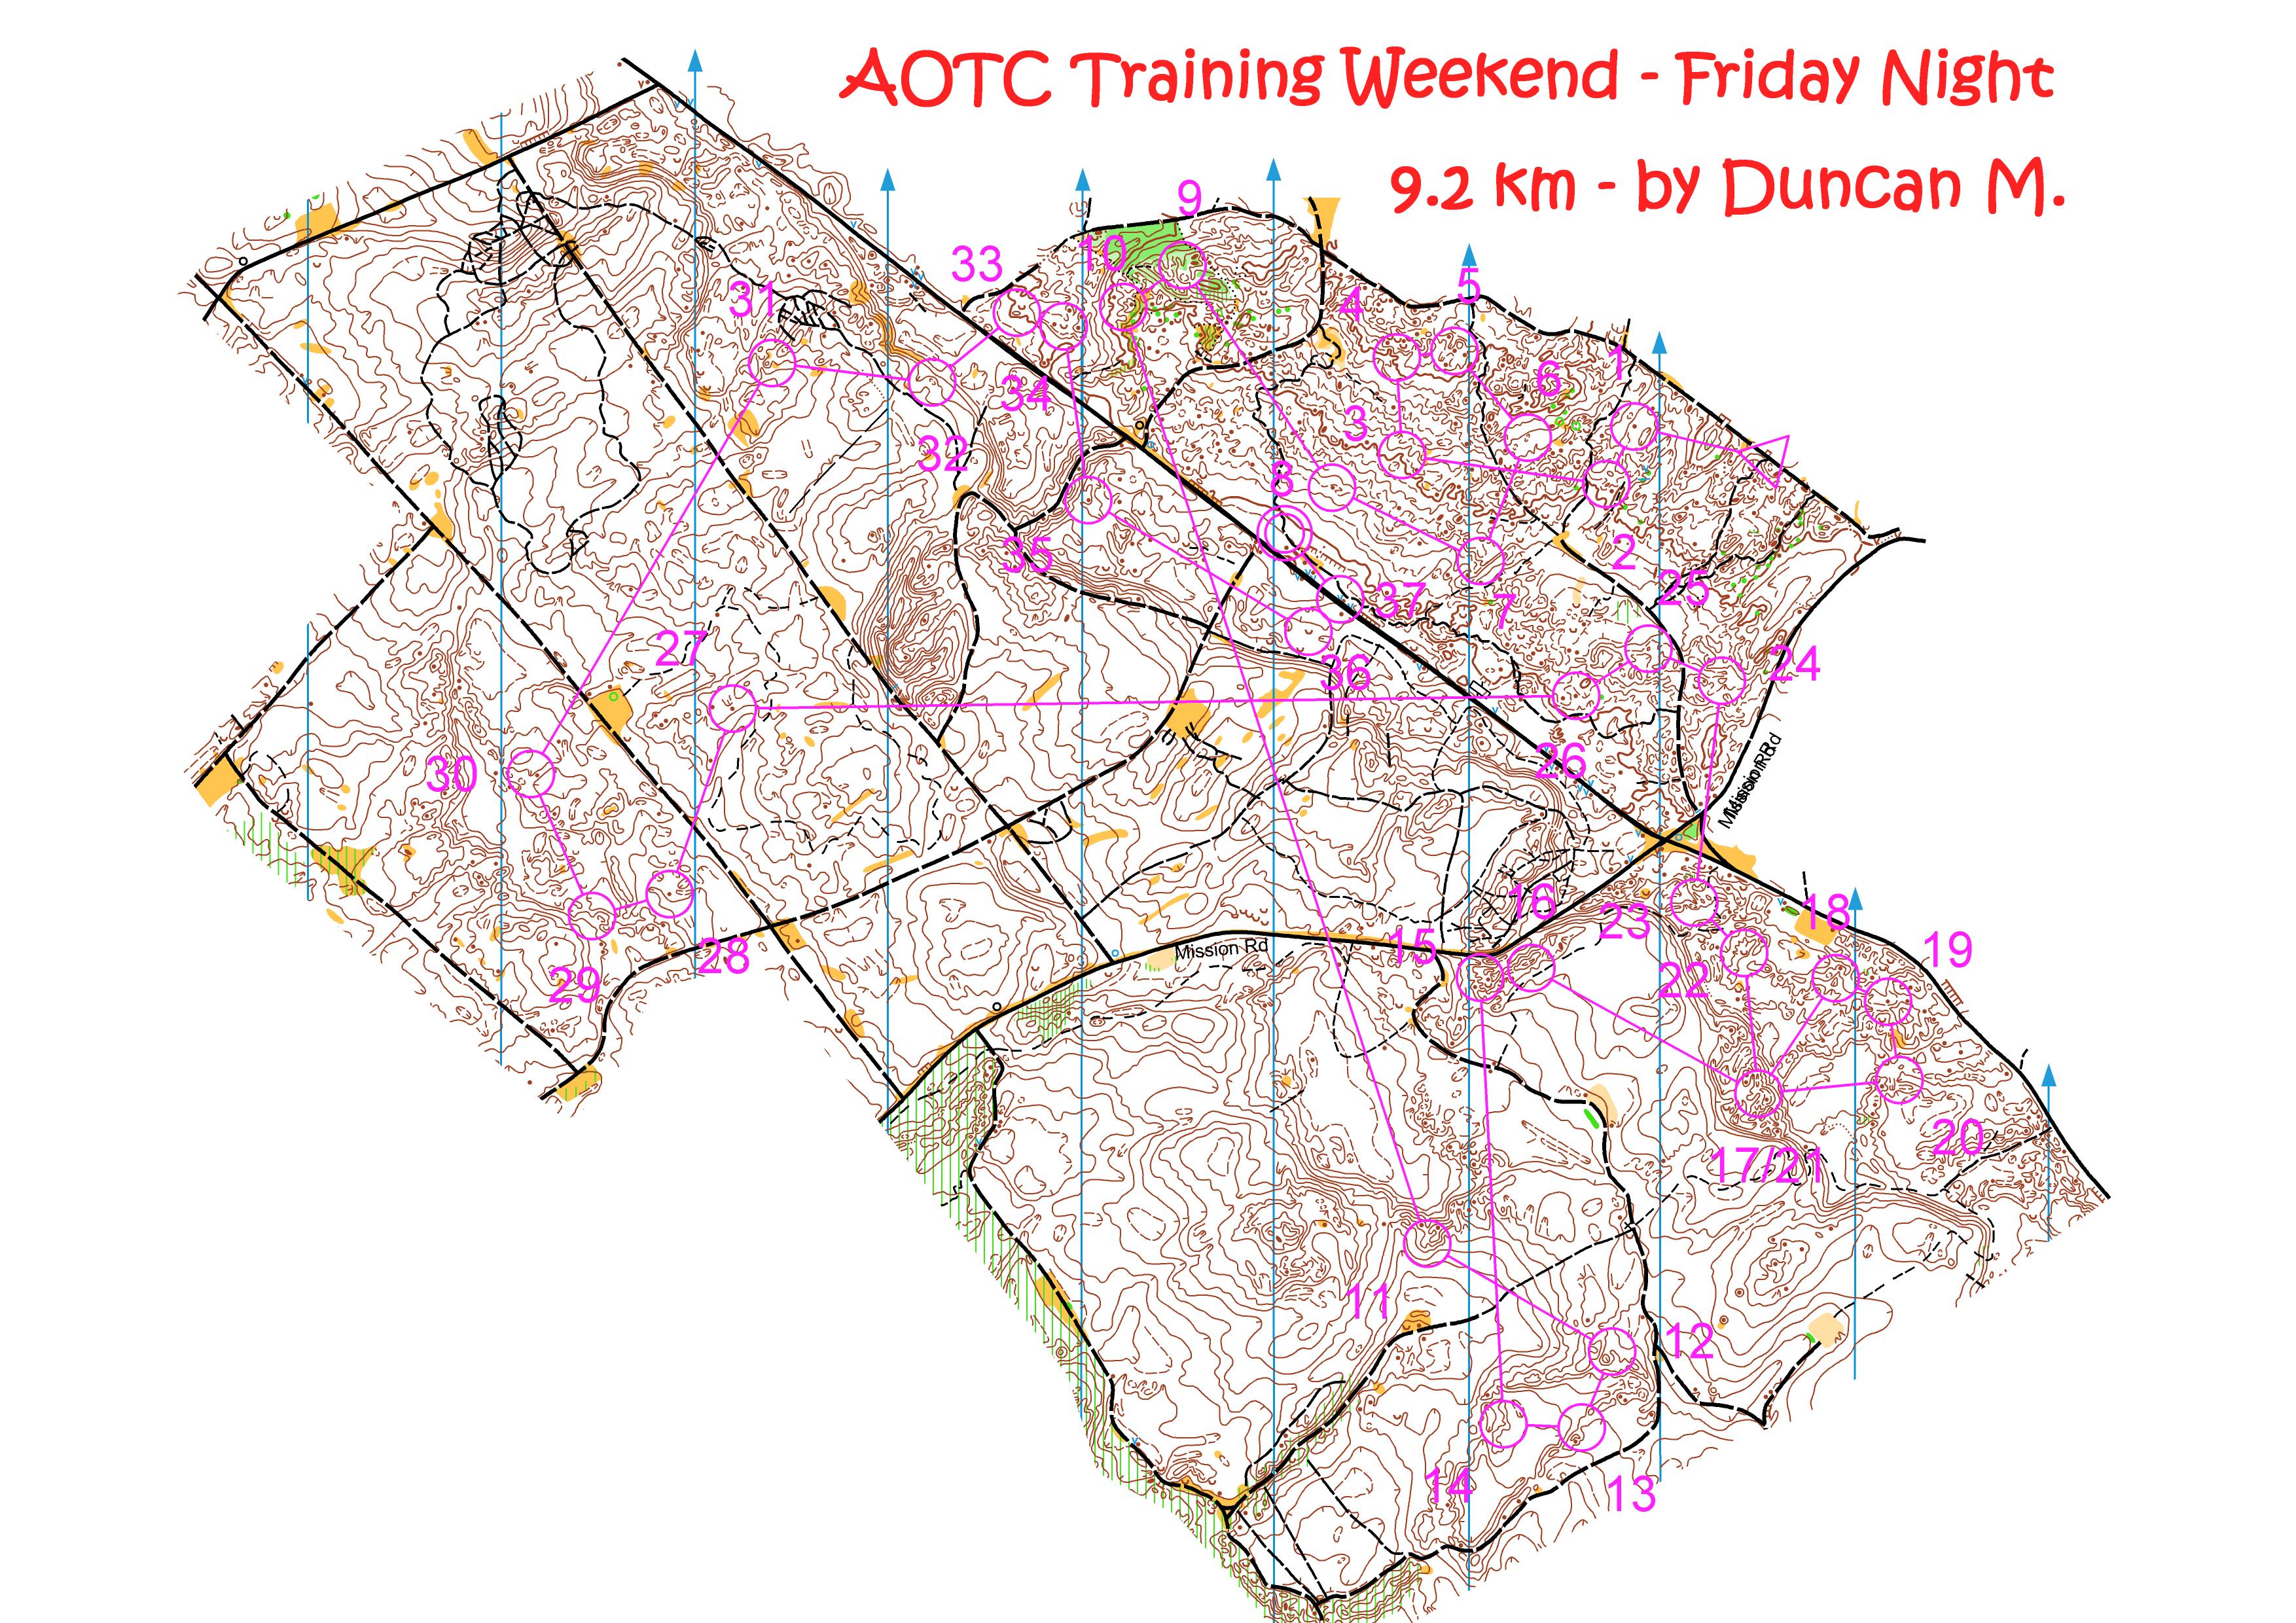 AOTC Training Weekend - Friday Night (16.11.2012)